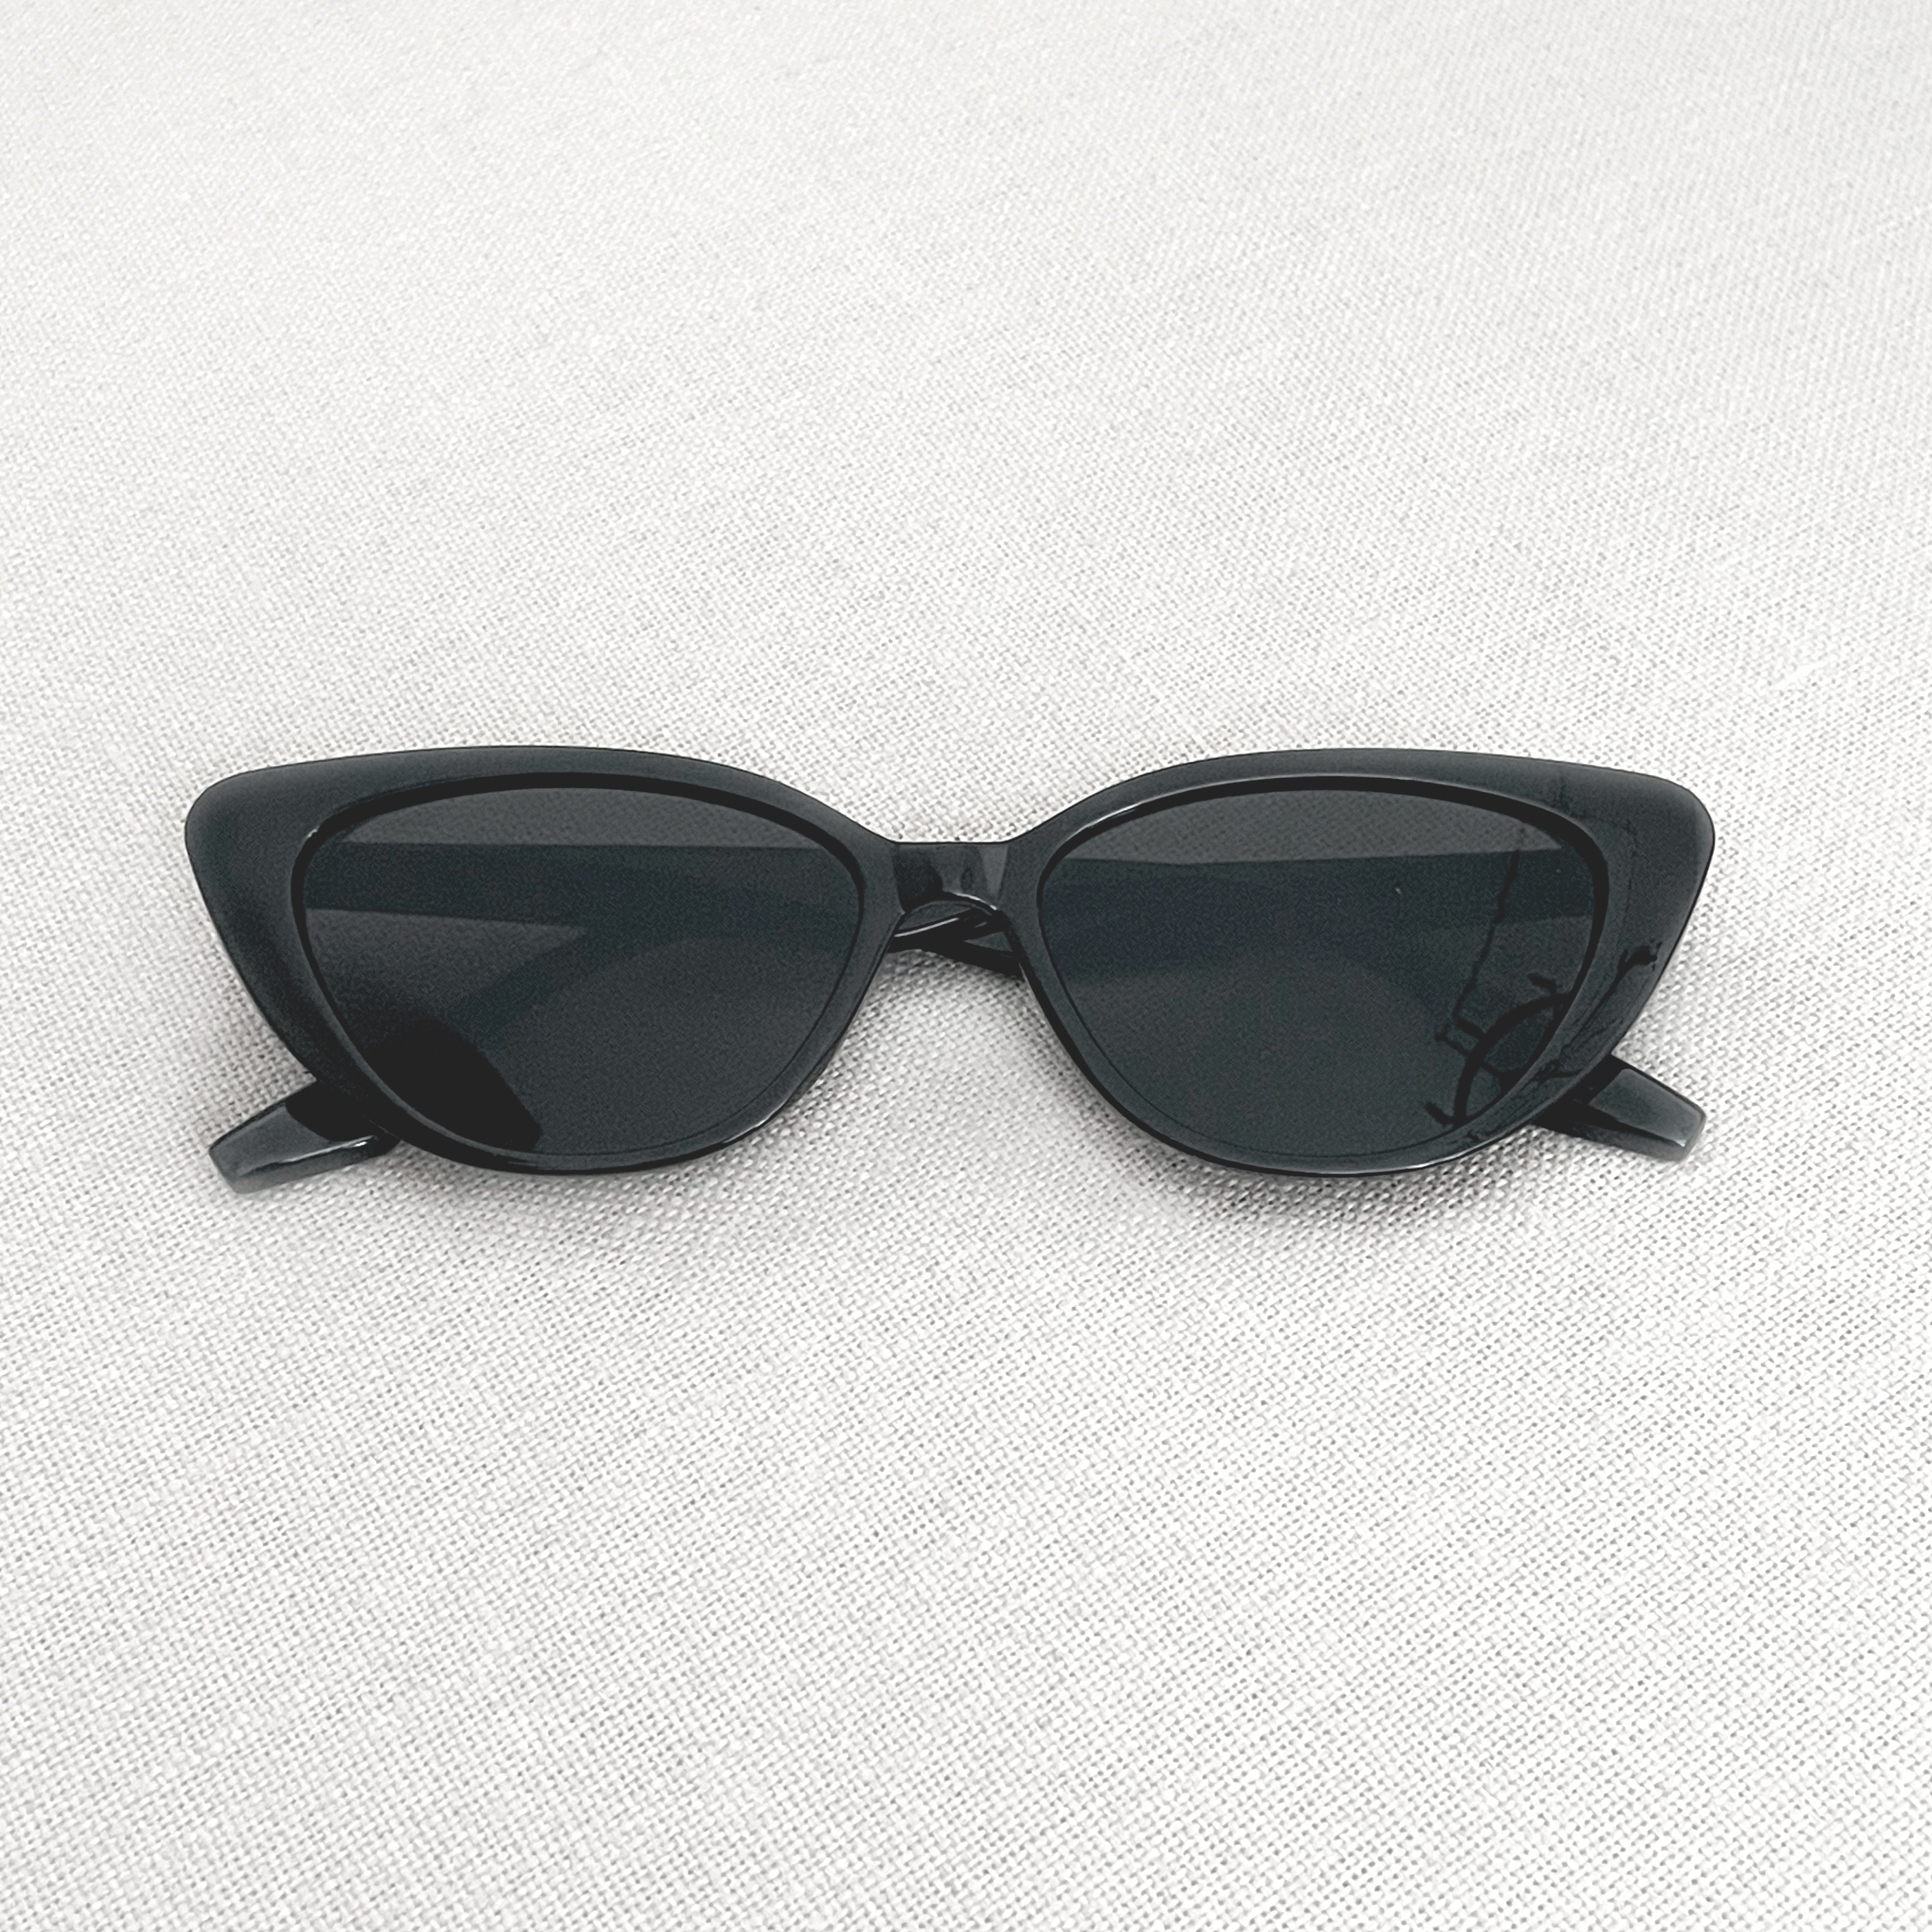 Sunglasses - Adult Cateye Black